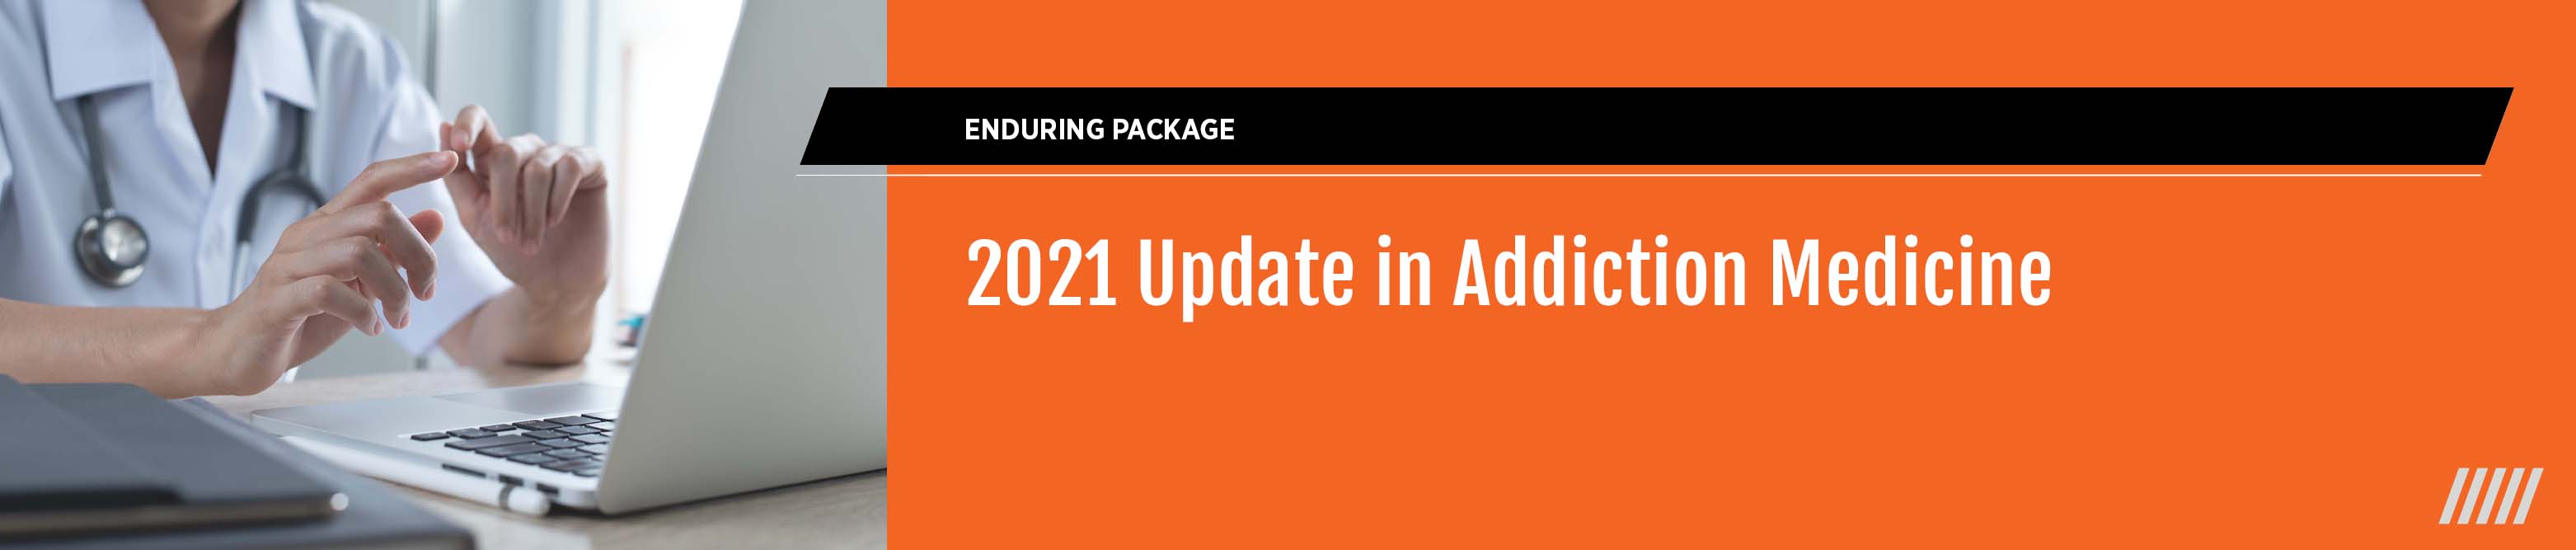 2021 Update in Addiction Medicine - Enduring Package Banner